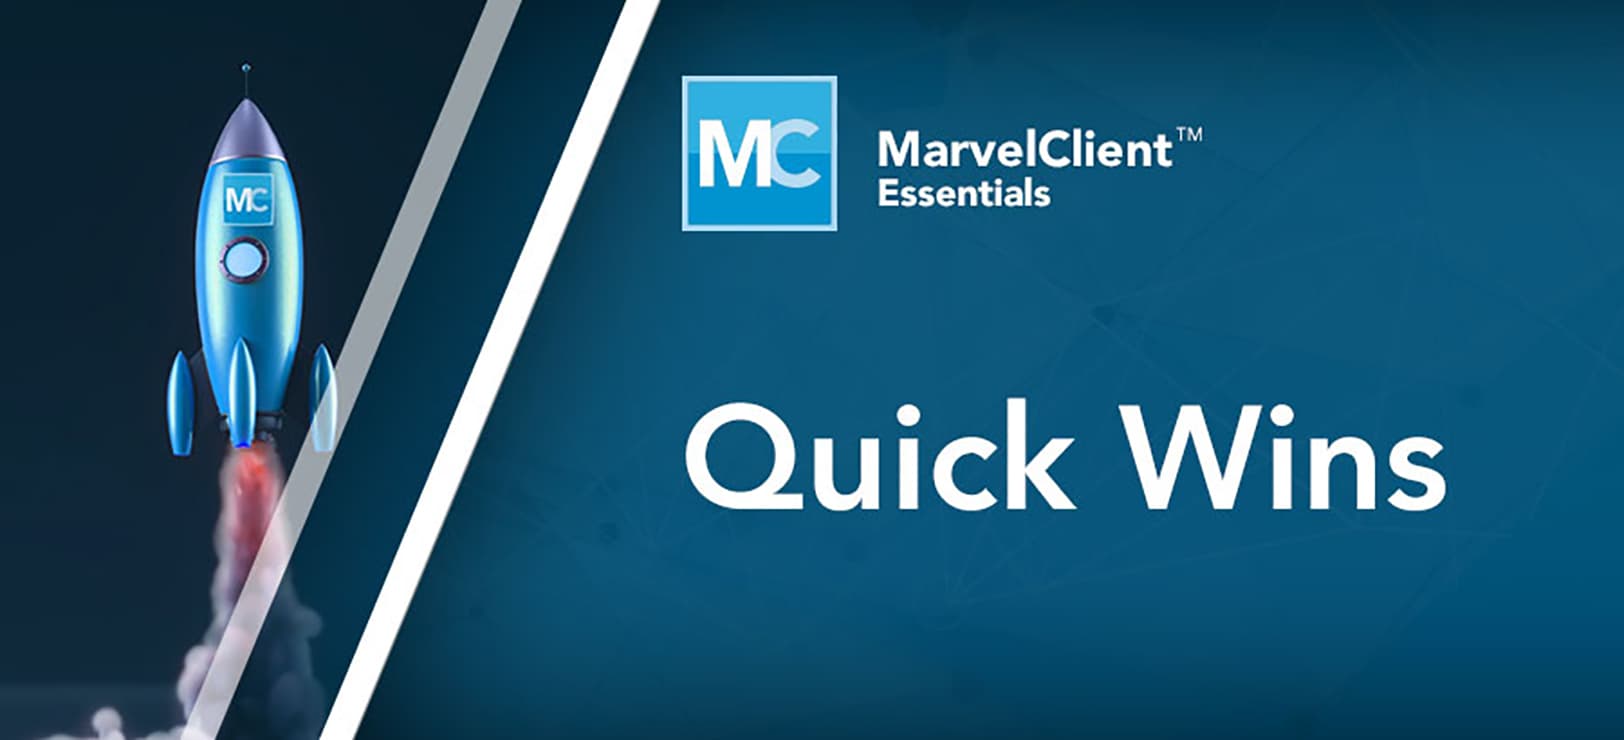 marvelclient_essentials_quick-wins